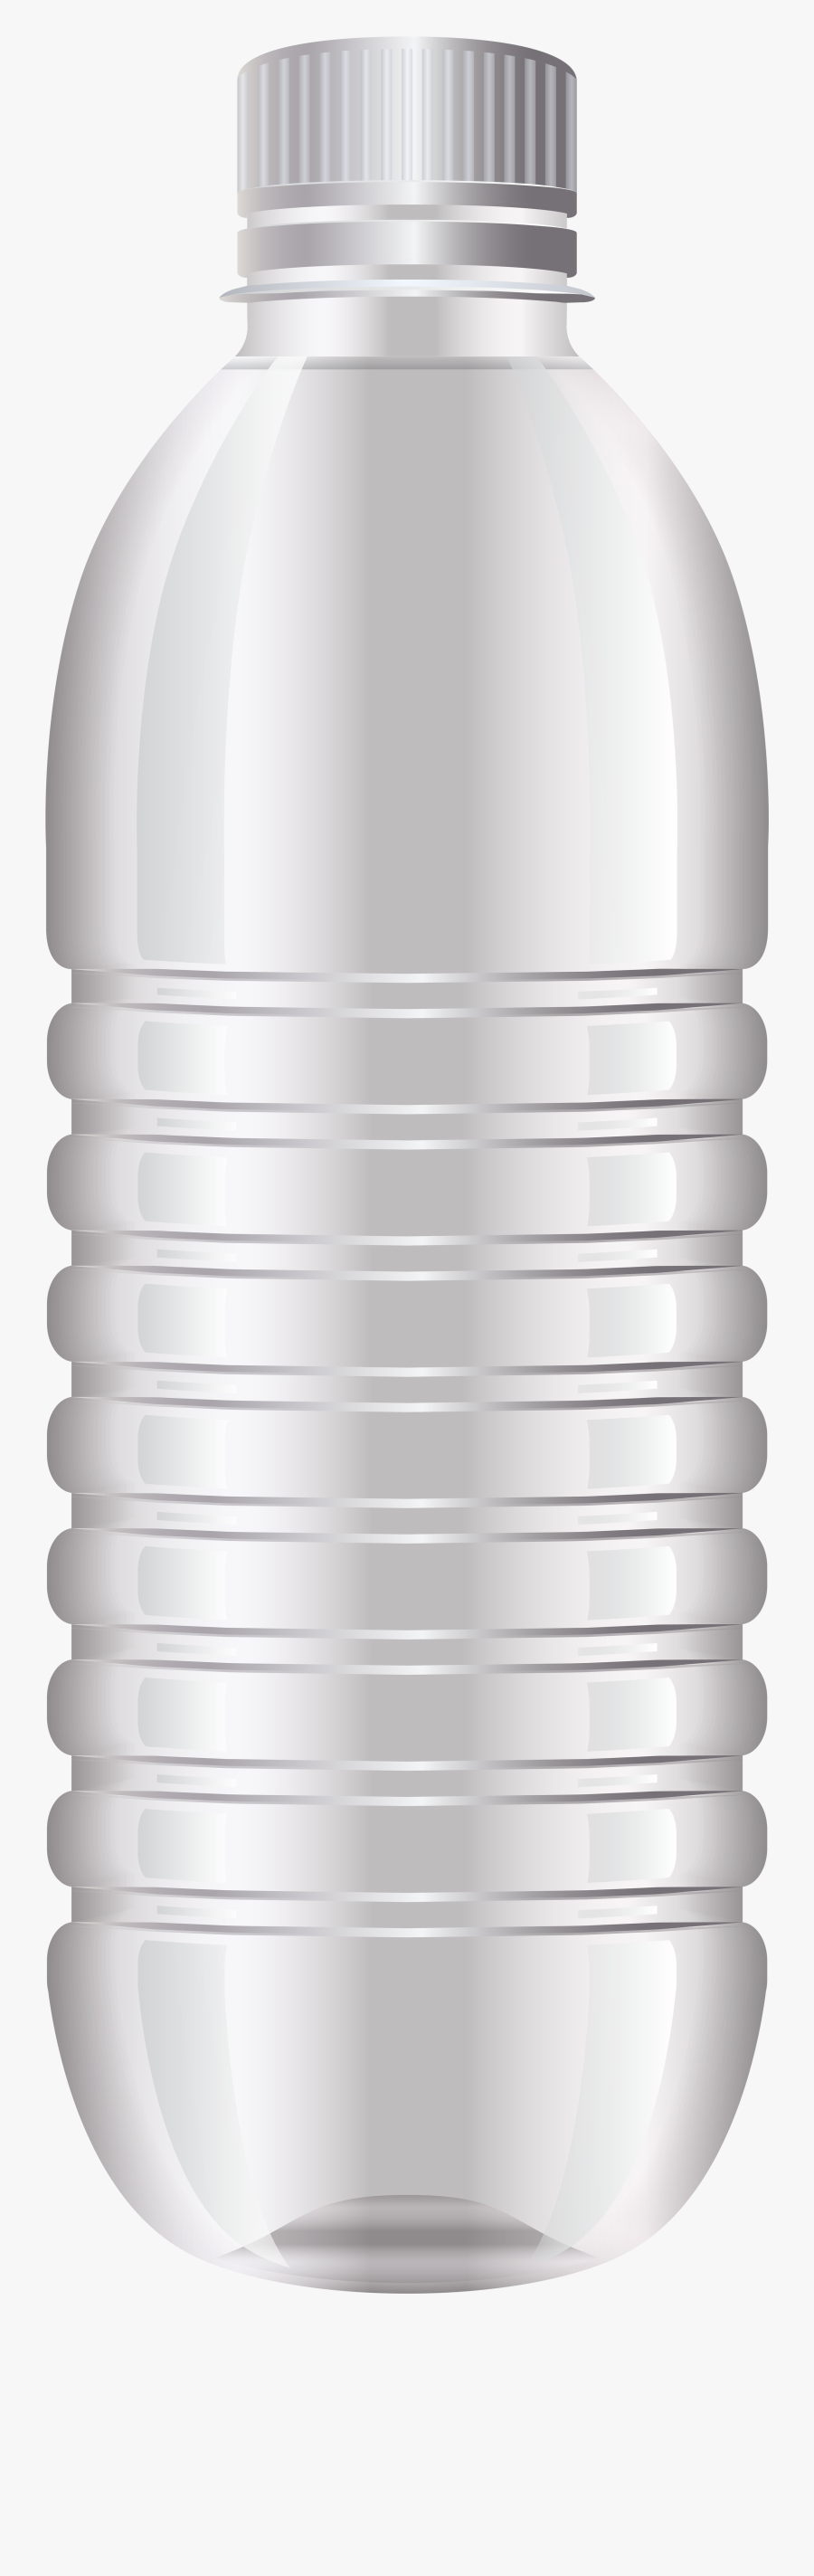 Water Bottle Png Clip Art - Water Bottle Png White Cap, Transparent Clipart